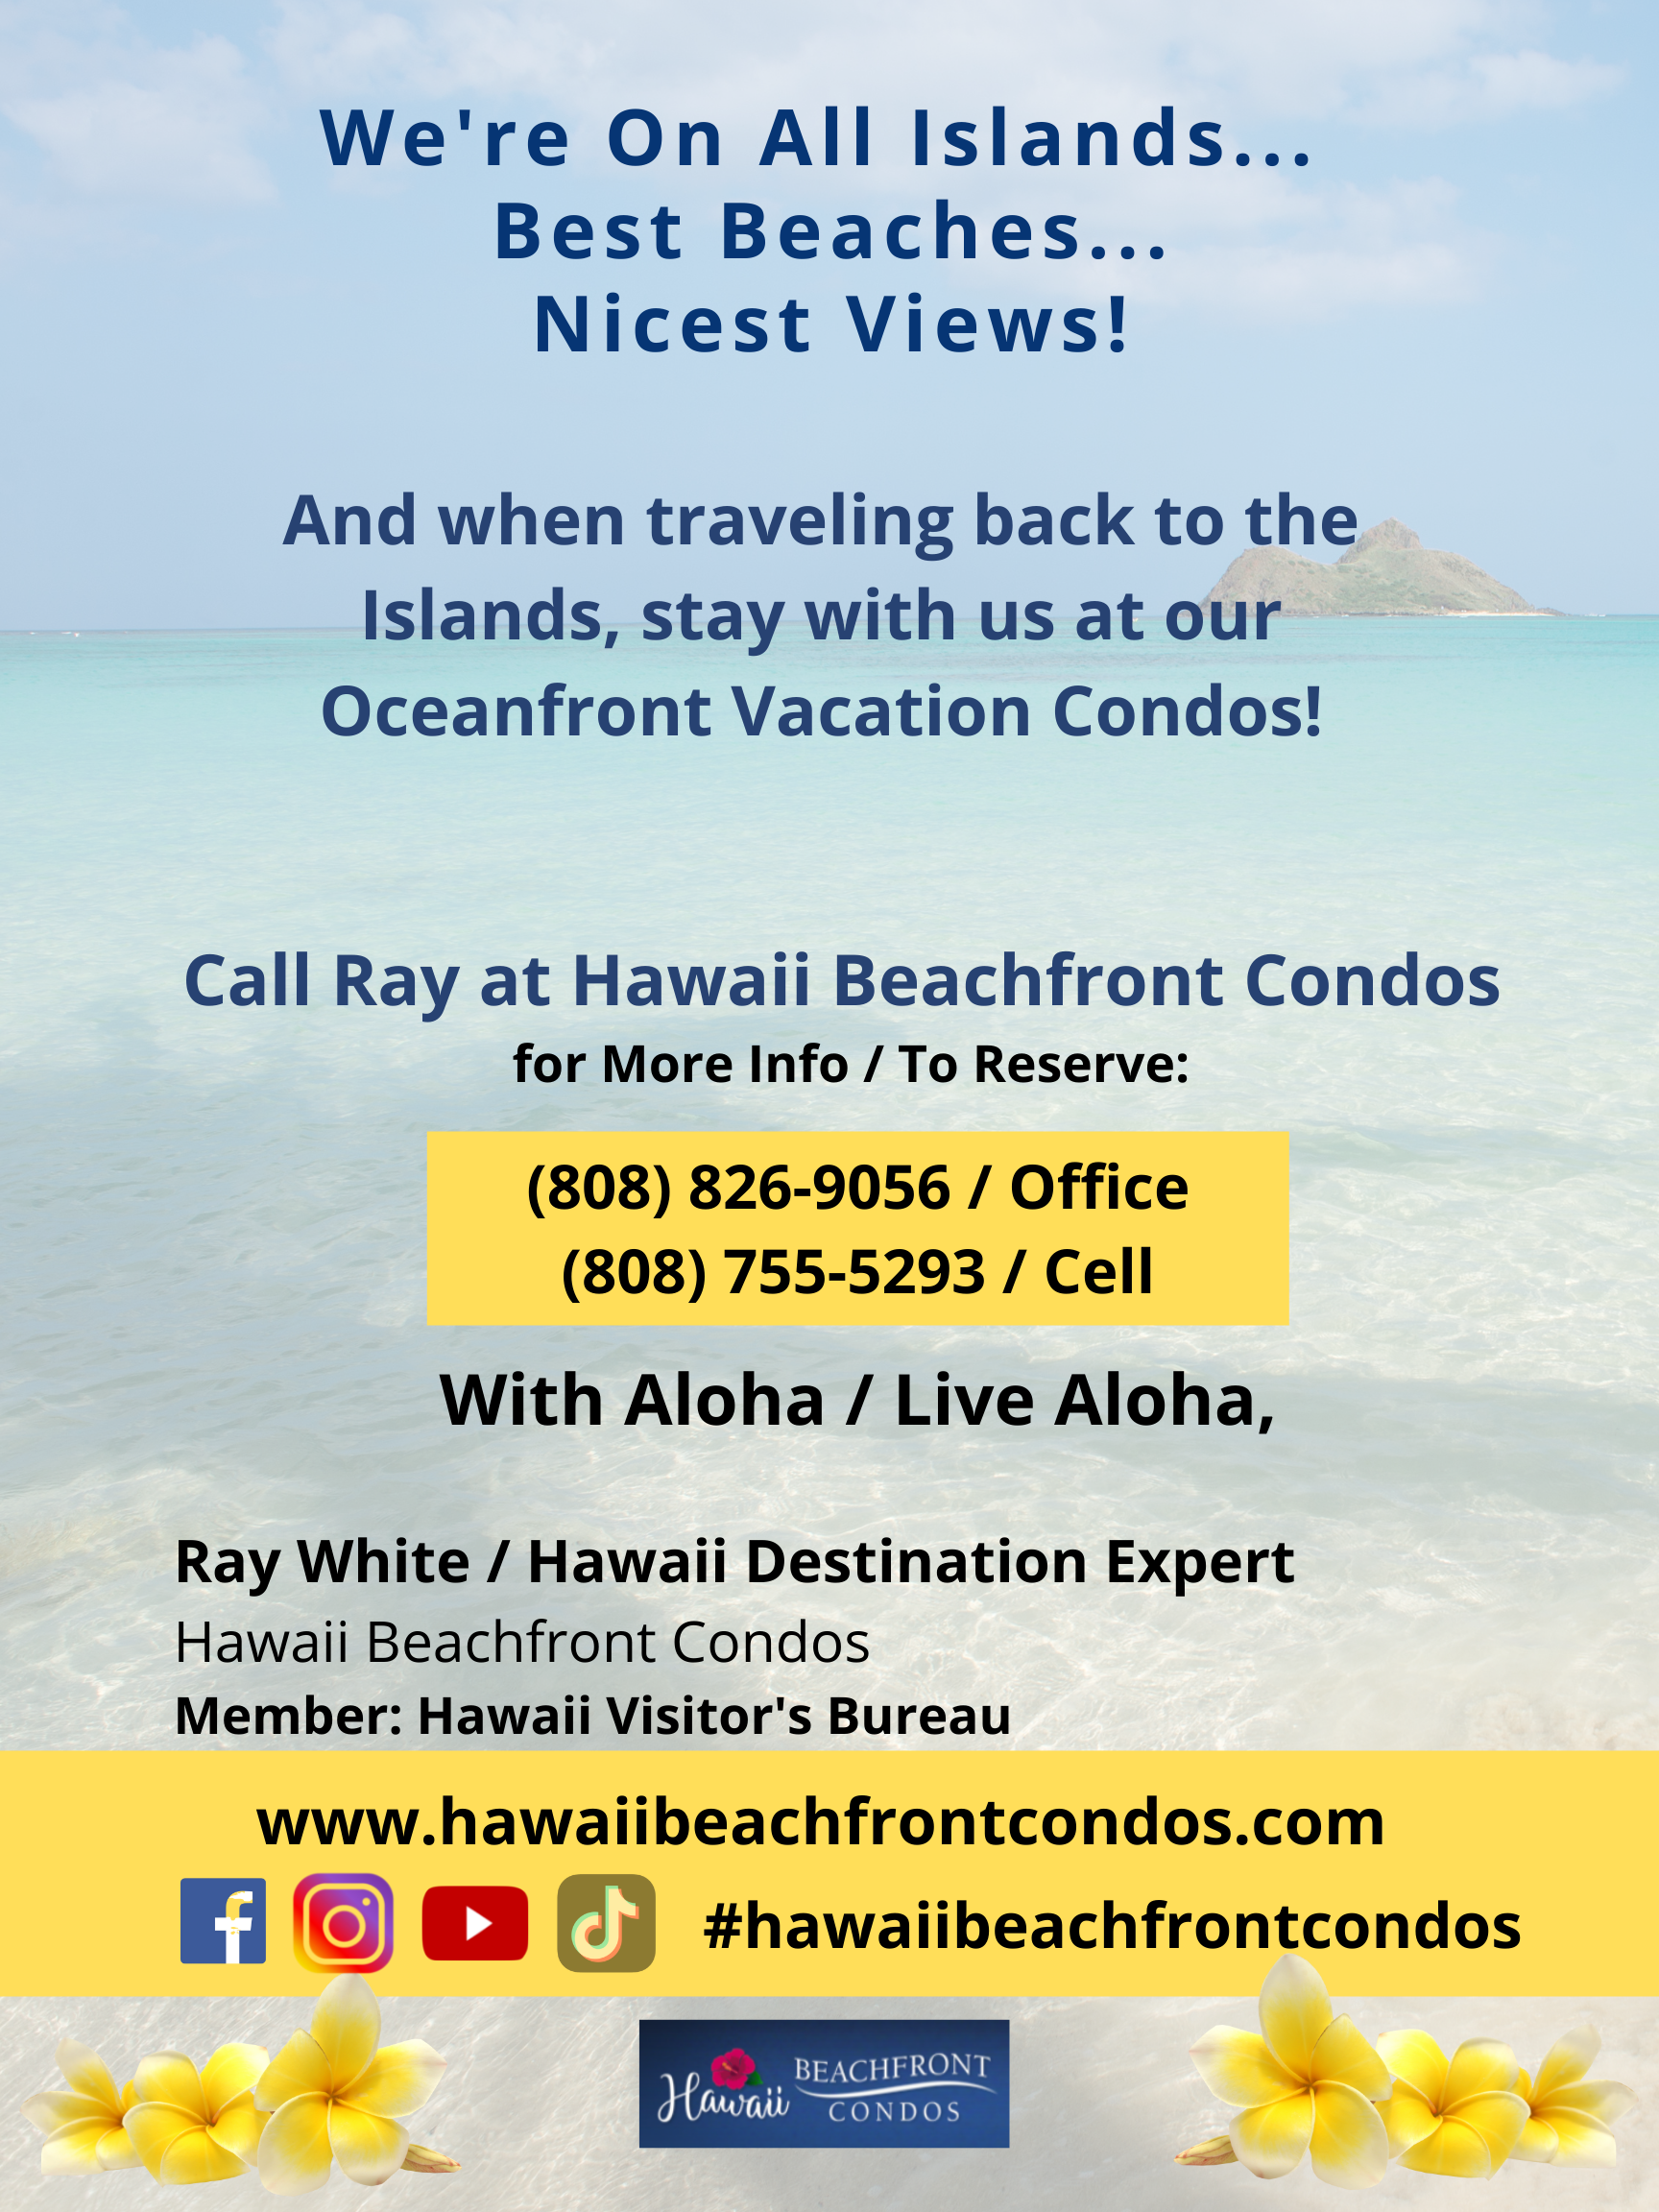 Best beachfront condos in Hawaii, Hawaii condo rentals island wide, Hawaii vacation rentals, condos Hawaii near beach front, activities in Hawaii, Hawaii beachfront condos